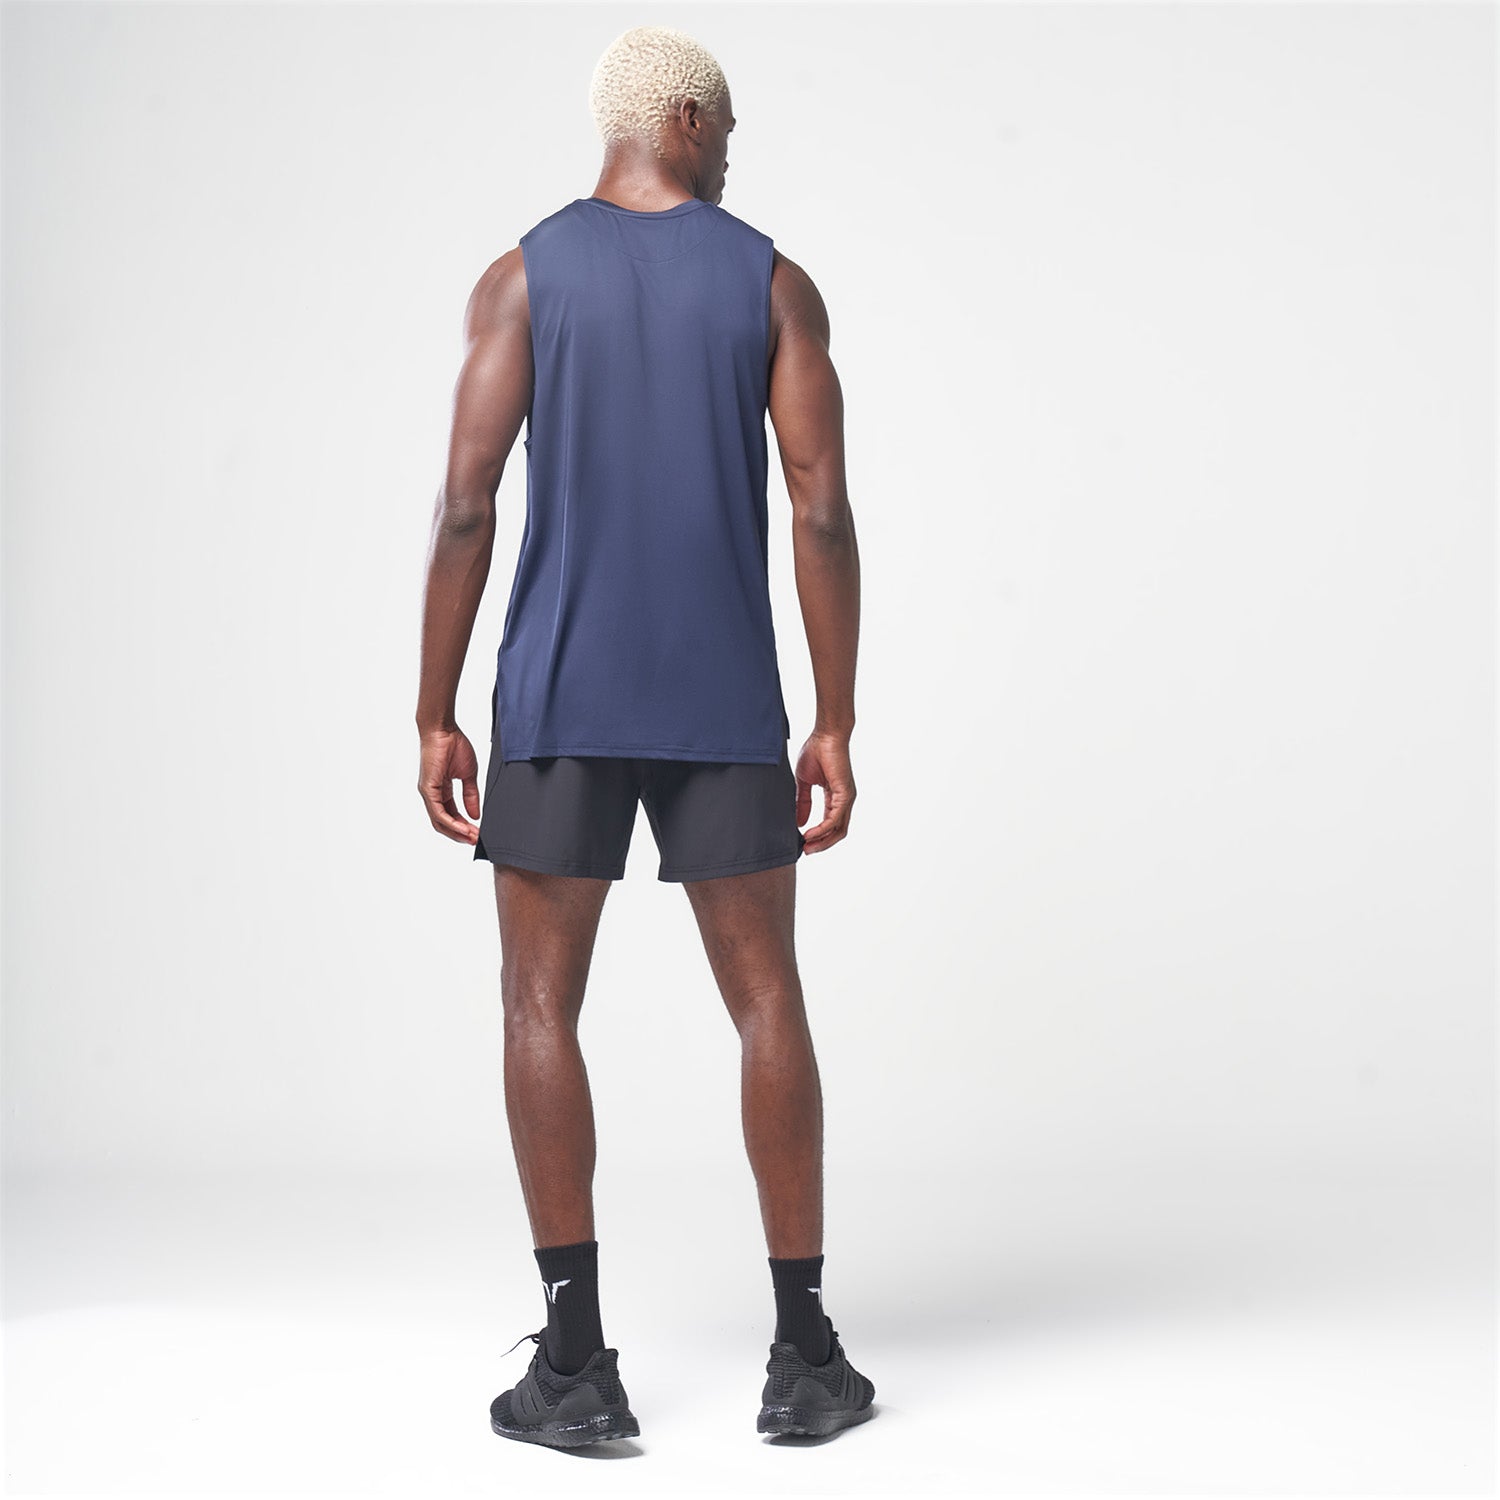 squatwolf-gym-wear-essential-gym-tank-navy-workout-tank-for-men